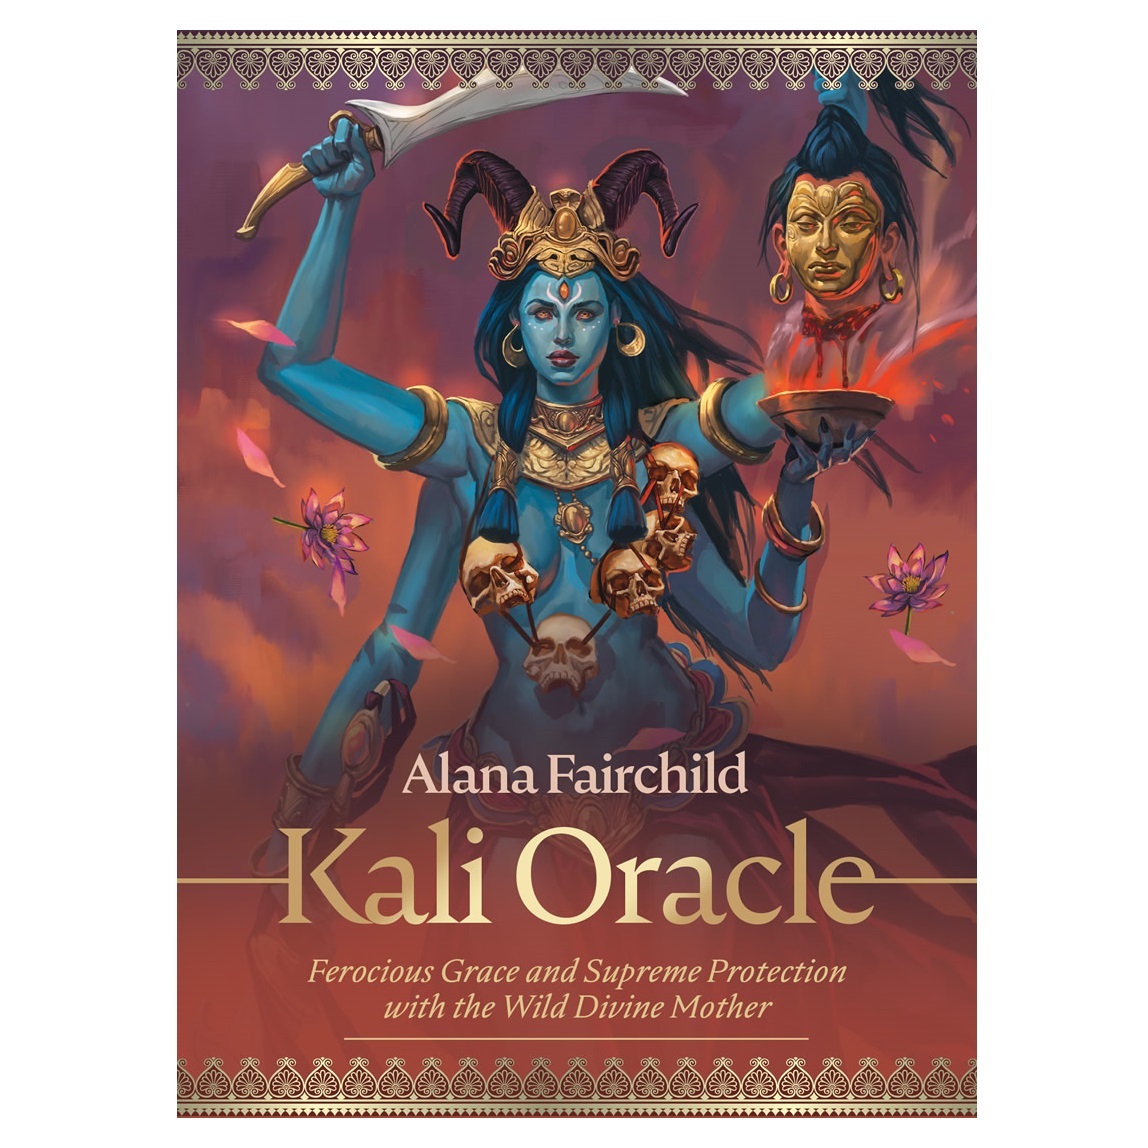 

Оракул богини Кали (Kali Oracle)